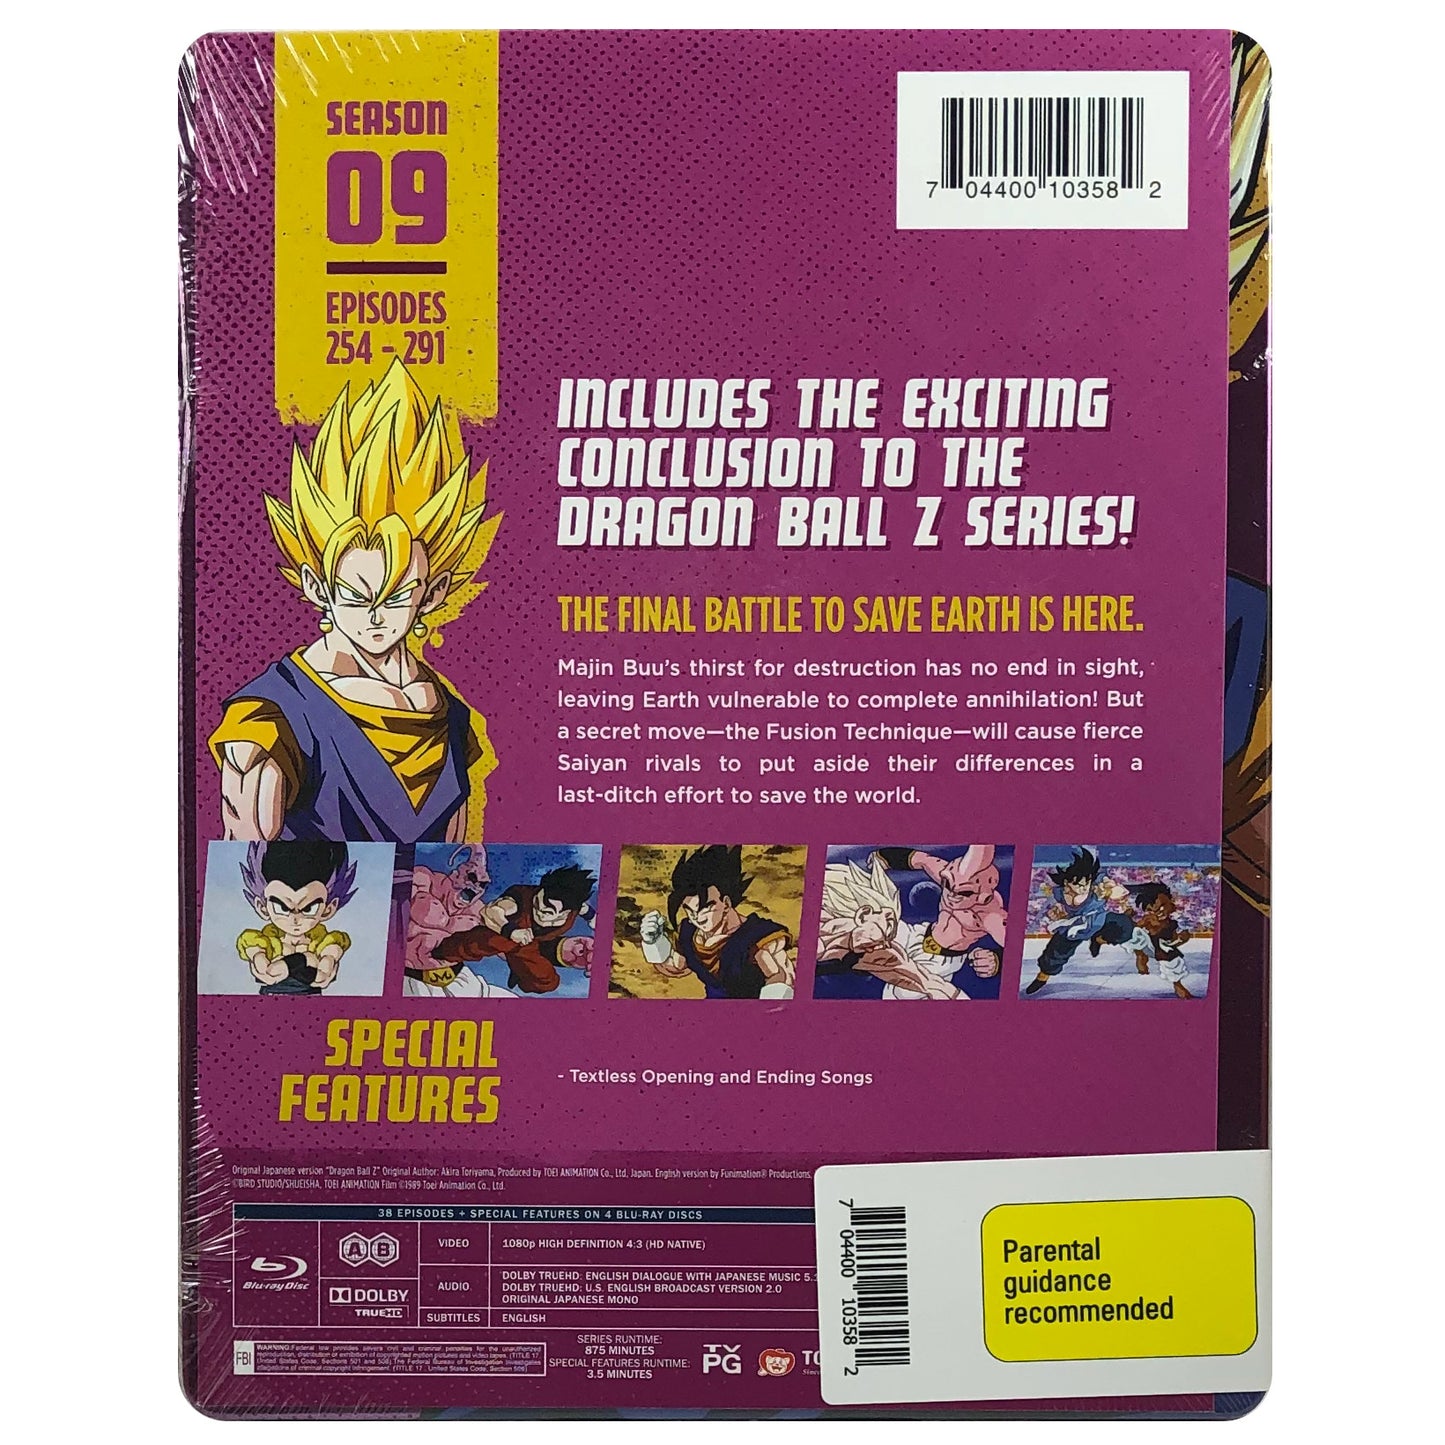 Dragon Ball Z - Season 09 Blu-Ray Steelbook